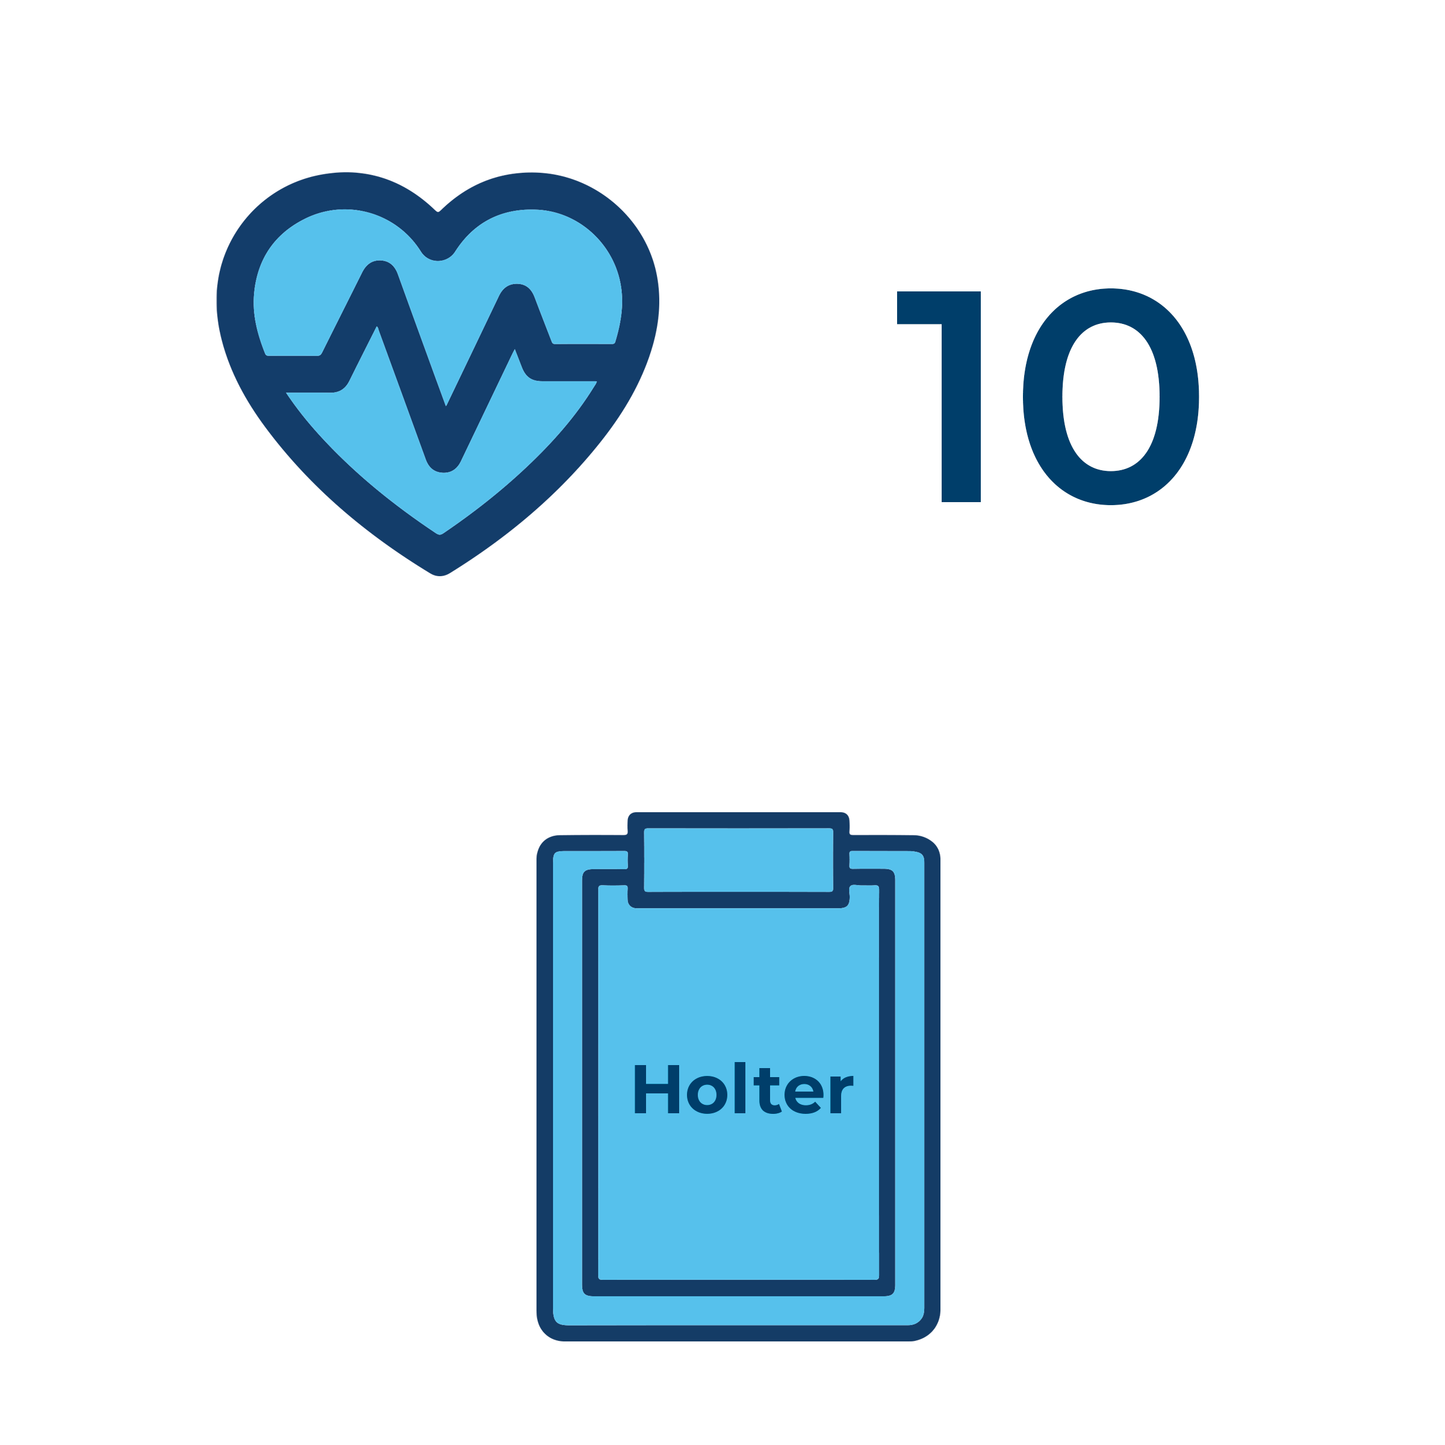 10 referti standard Holter cardiaco